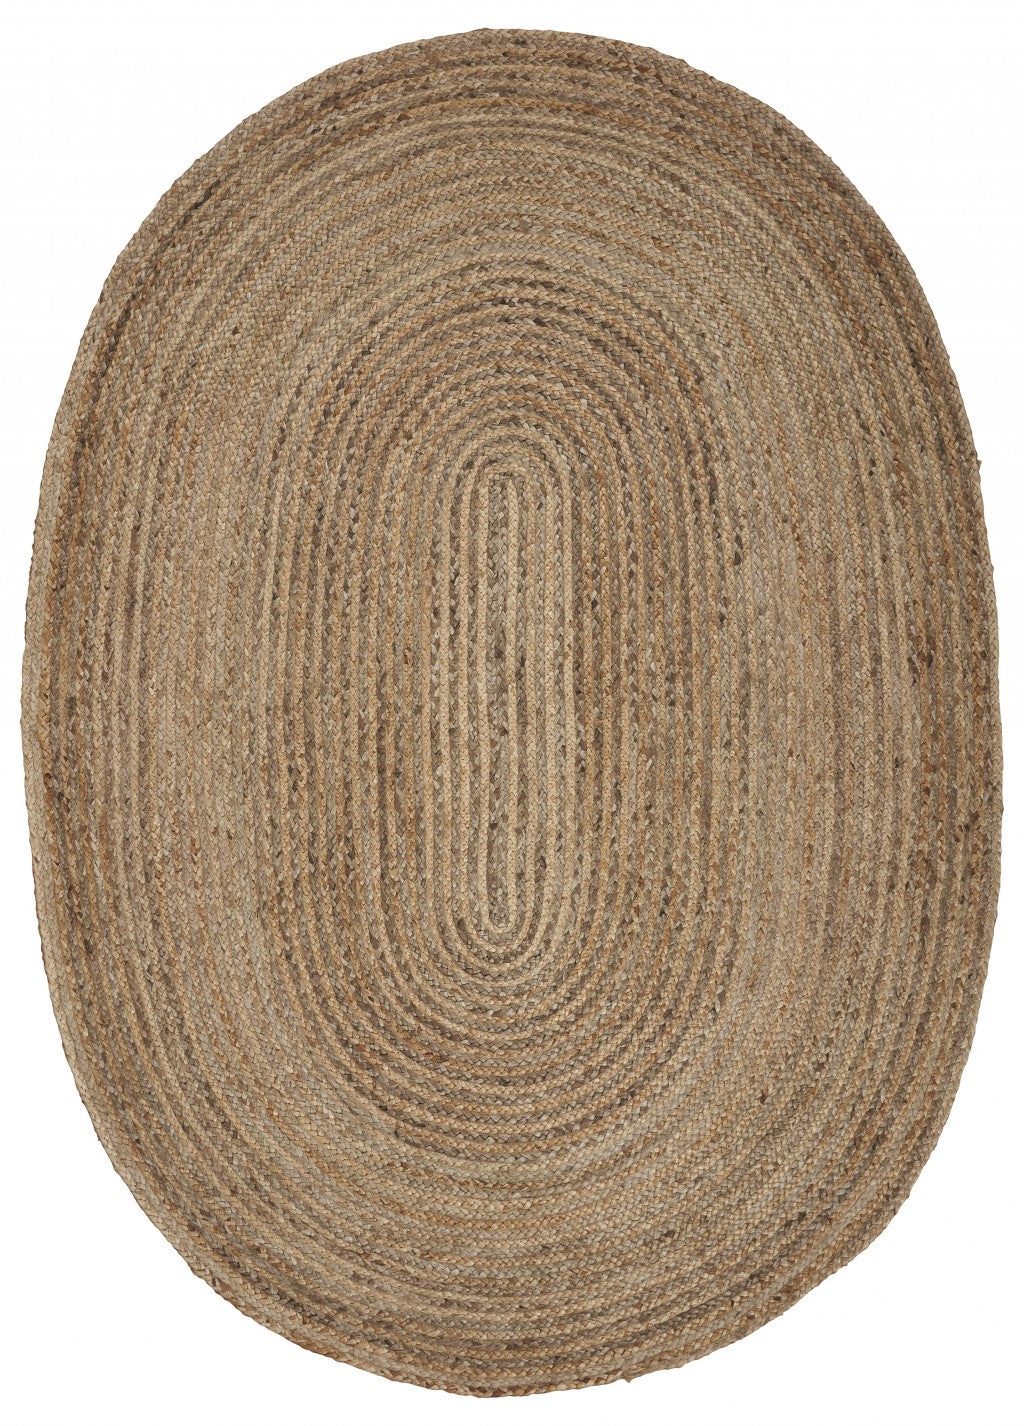 7’ Brown Oval Shaped Jute Area Rug